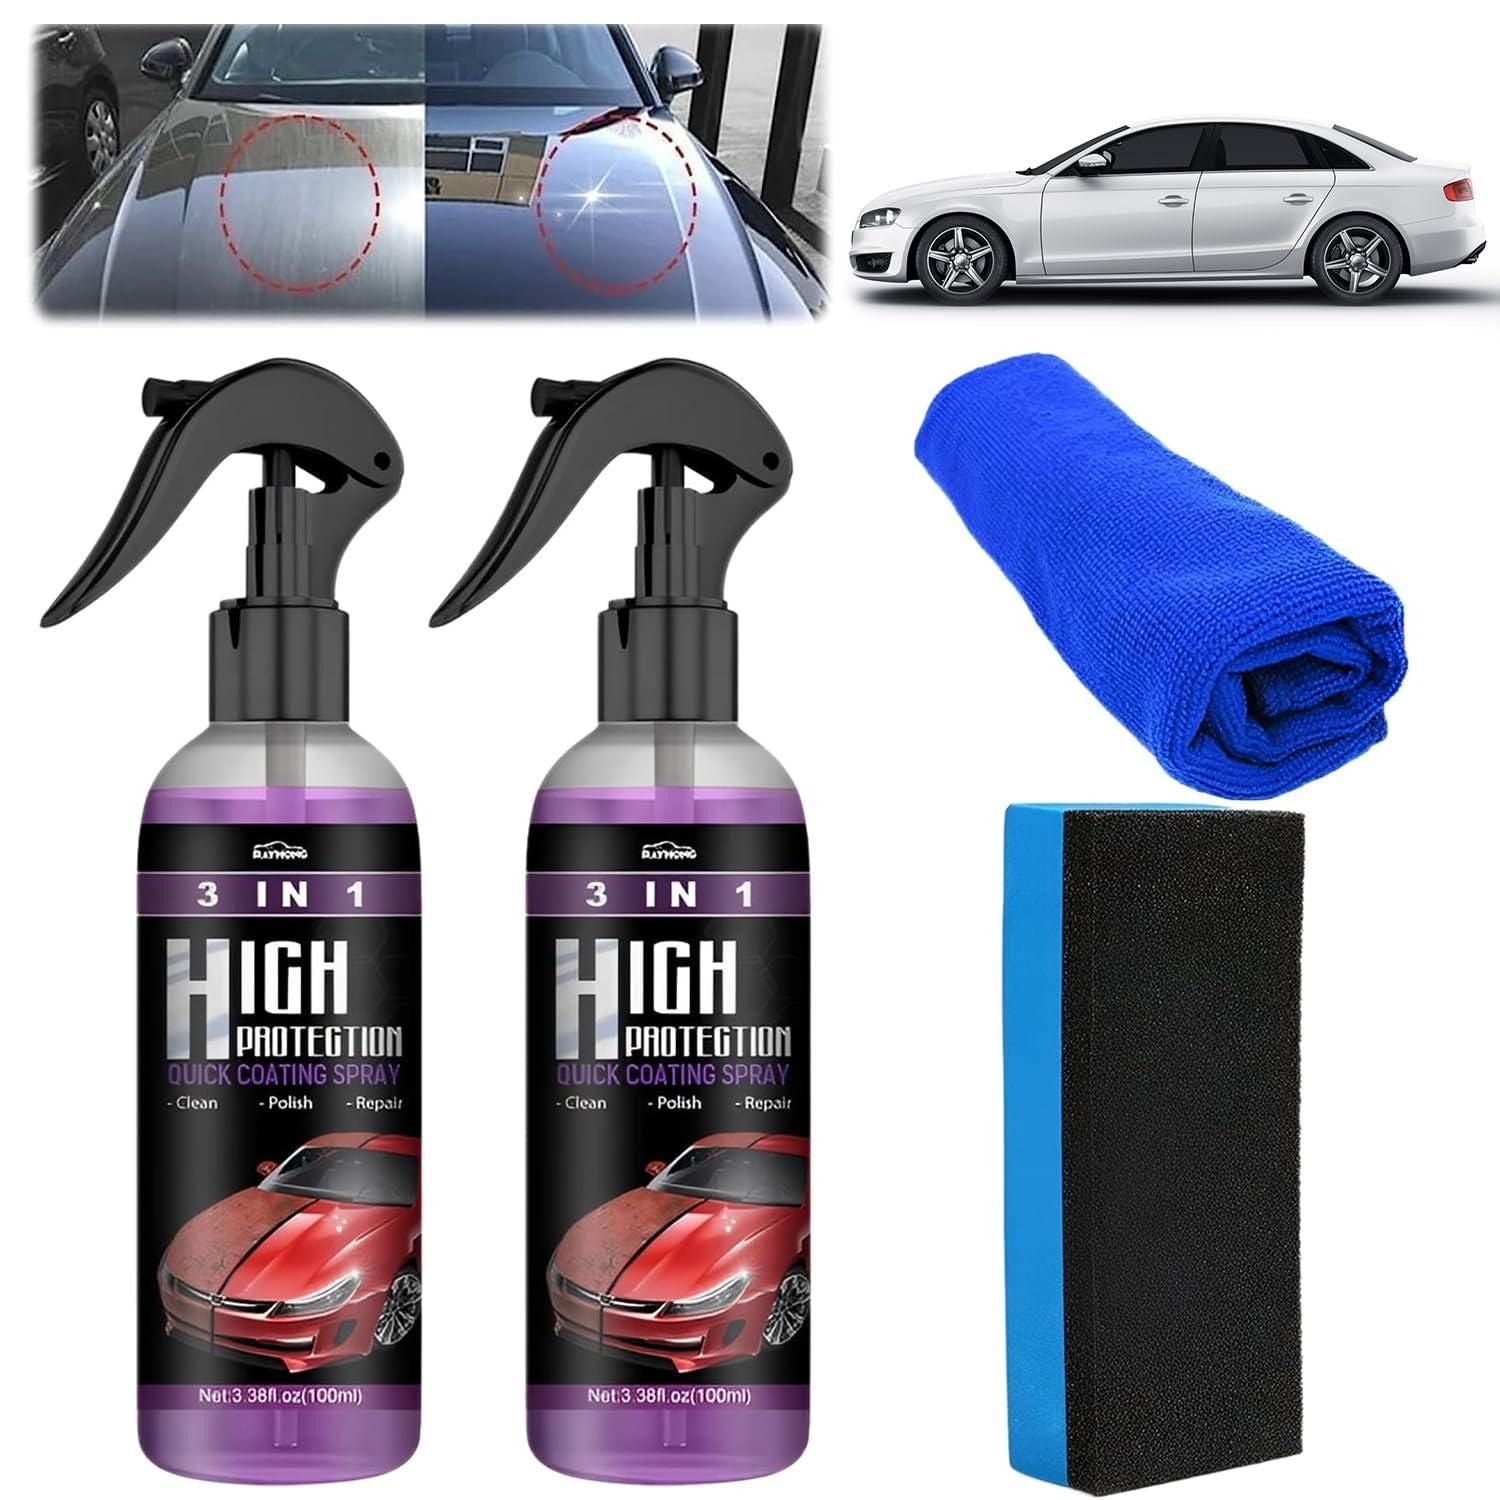 100ML 3 in 1 High Protection Quick Car Coat Ceramic Coating Spray